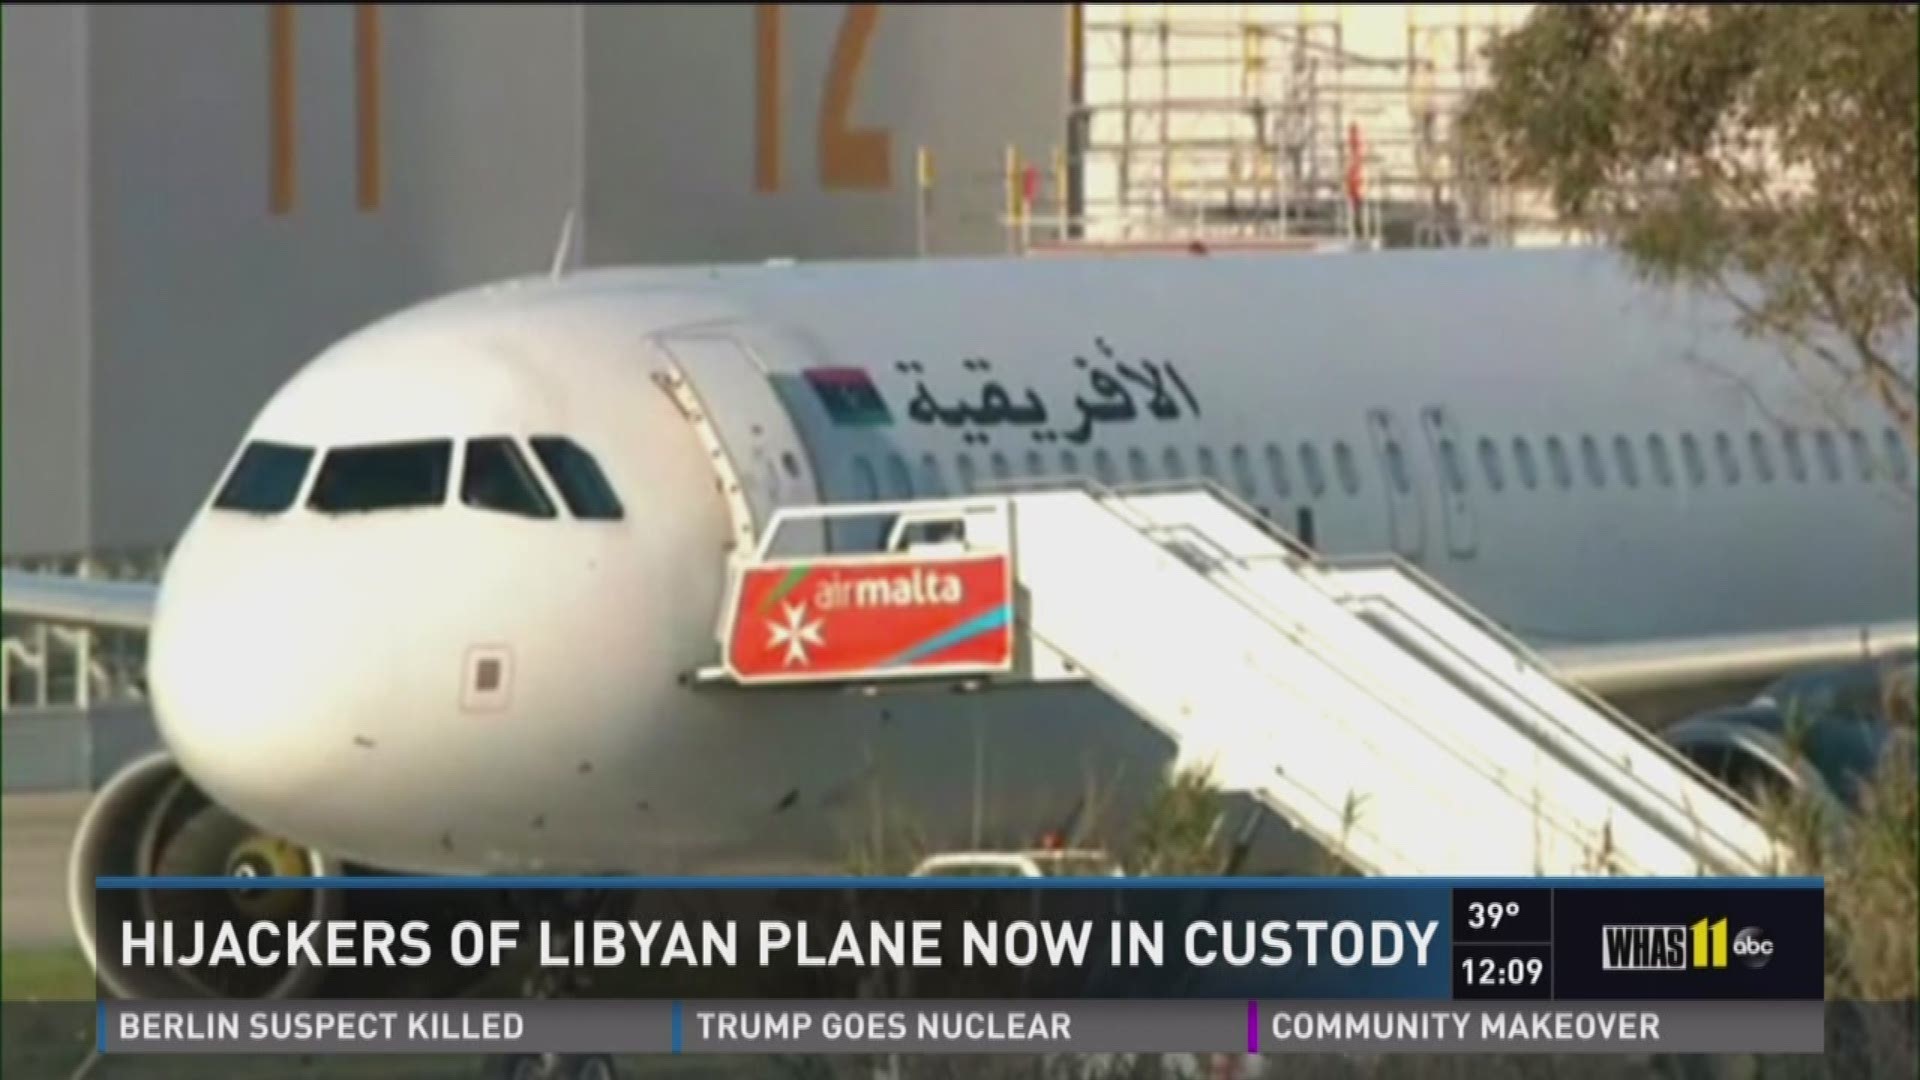 Hijackers of Libyan plane now in custody